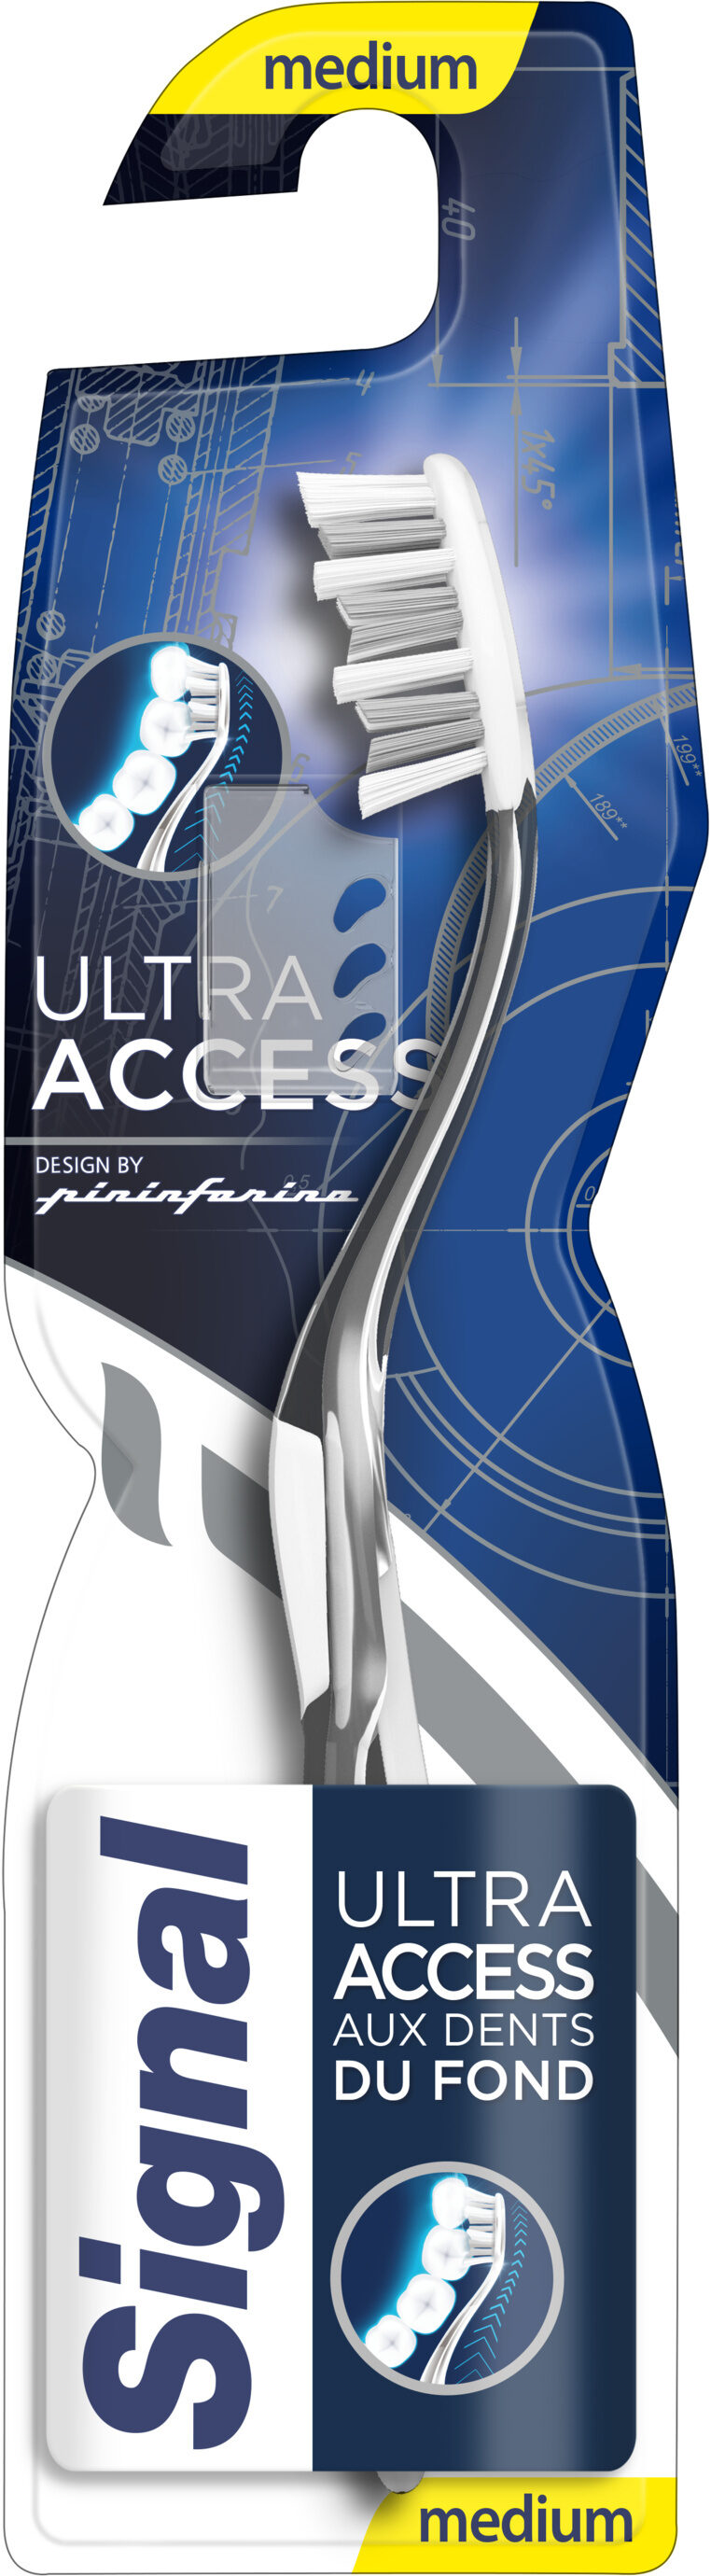 Signal Brosse à Dents Ultra Access Medium x1 - Produit - fr